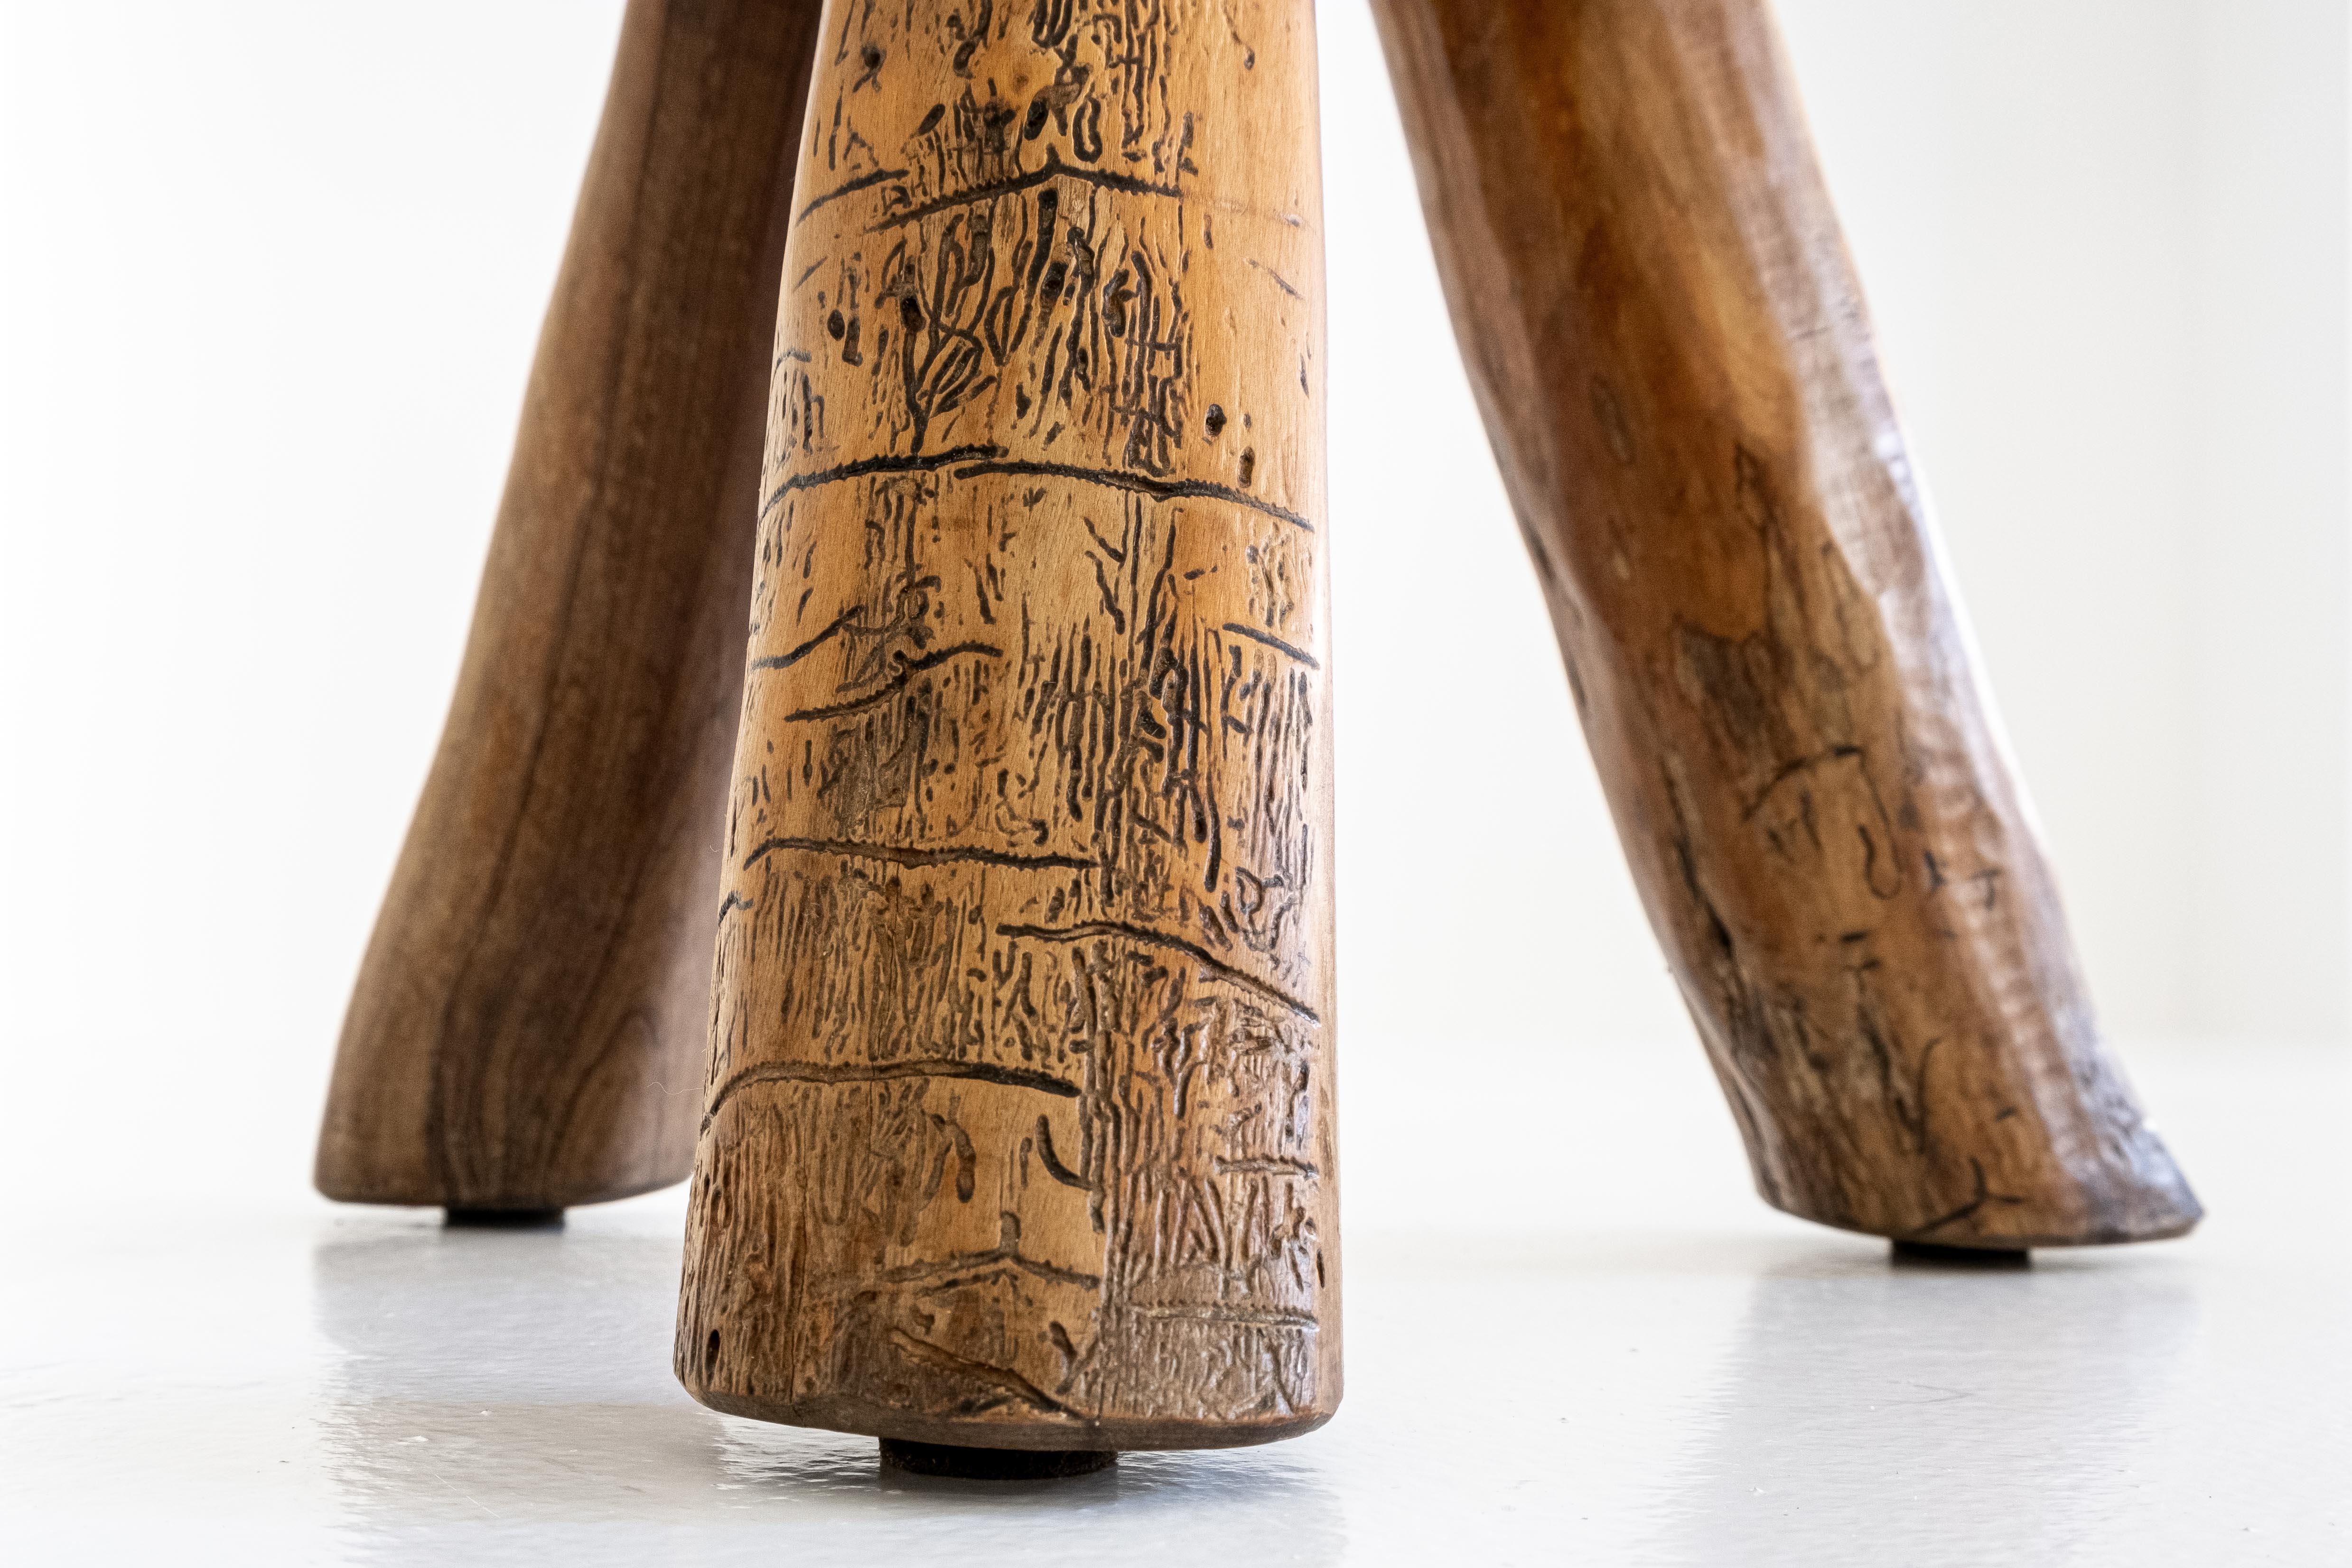 Handmade, Rustic, Sculptural, Massiv Olive Wood Tripod Stool or Side Table 3